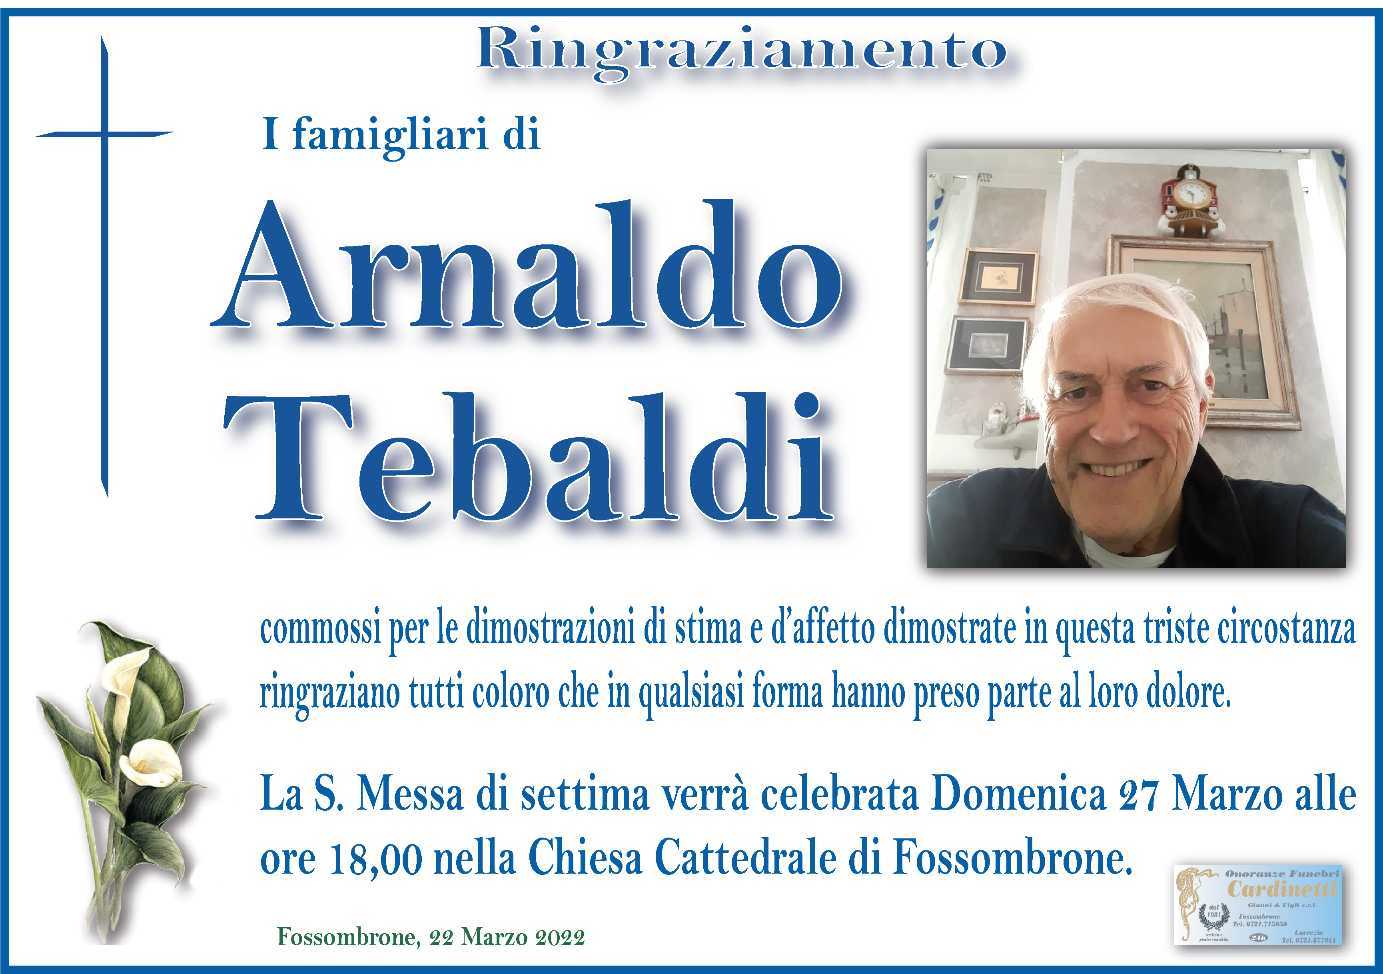 Arnaldo Tebaldi